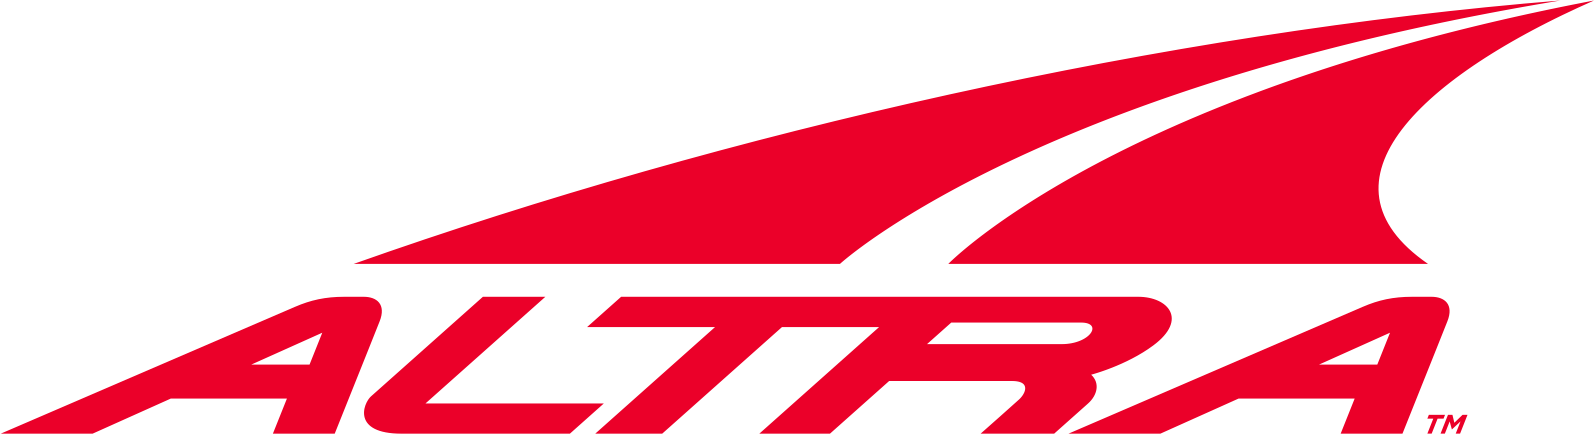 Buffalo Run - Altra Running Shoes Logo (1594x434)